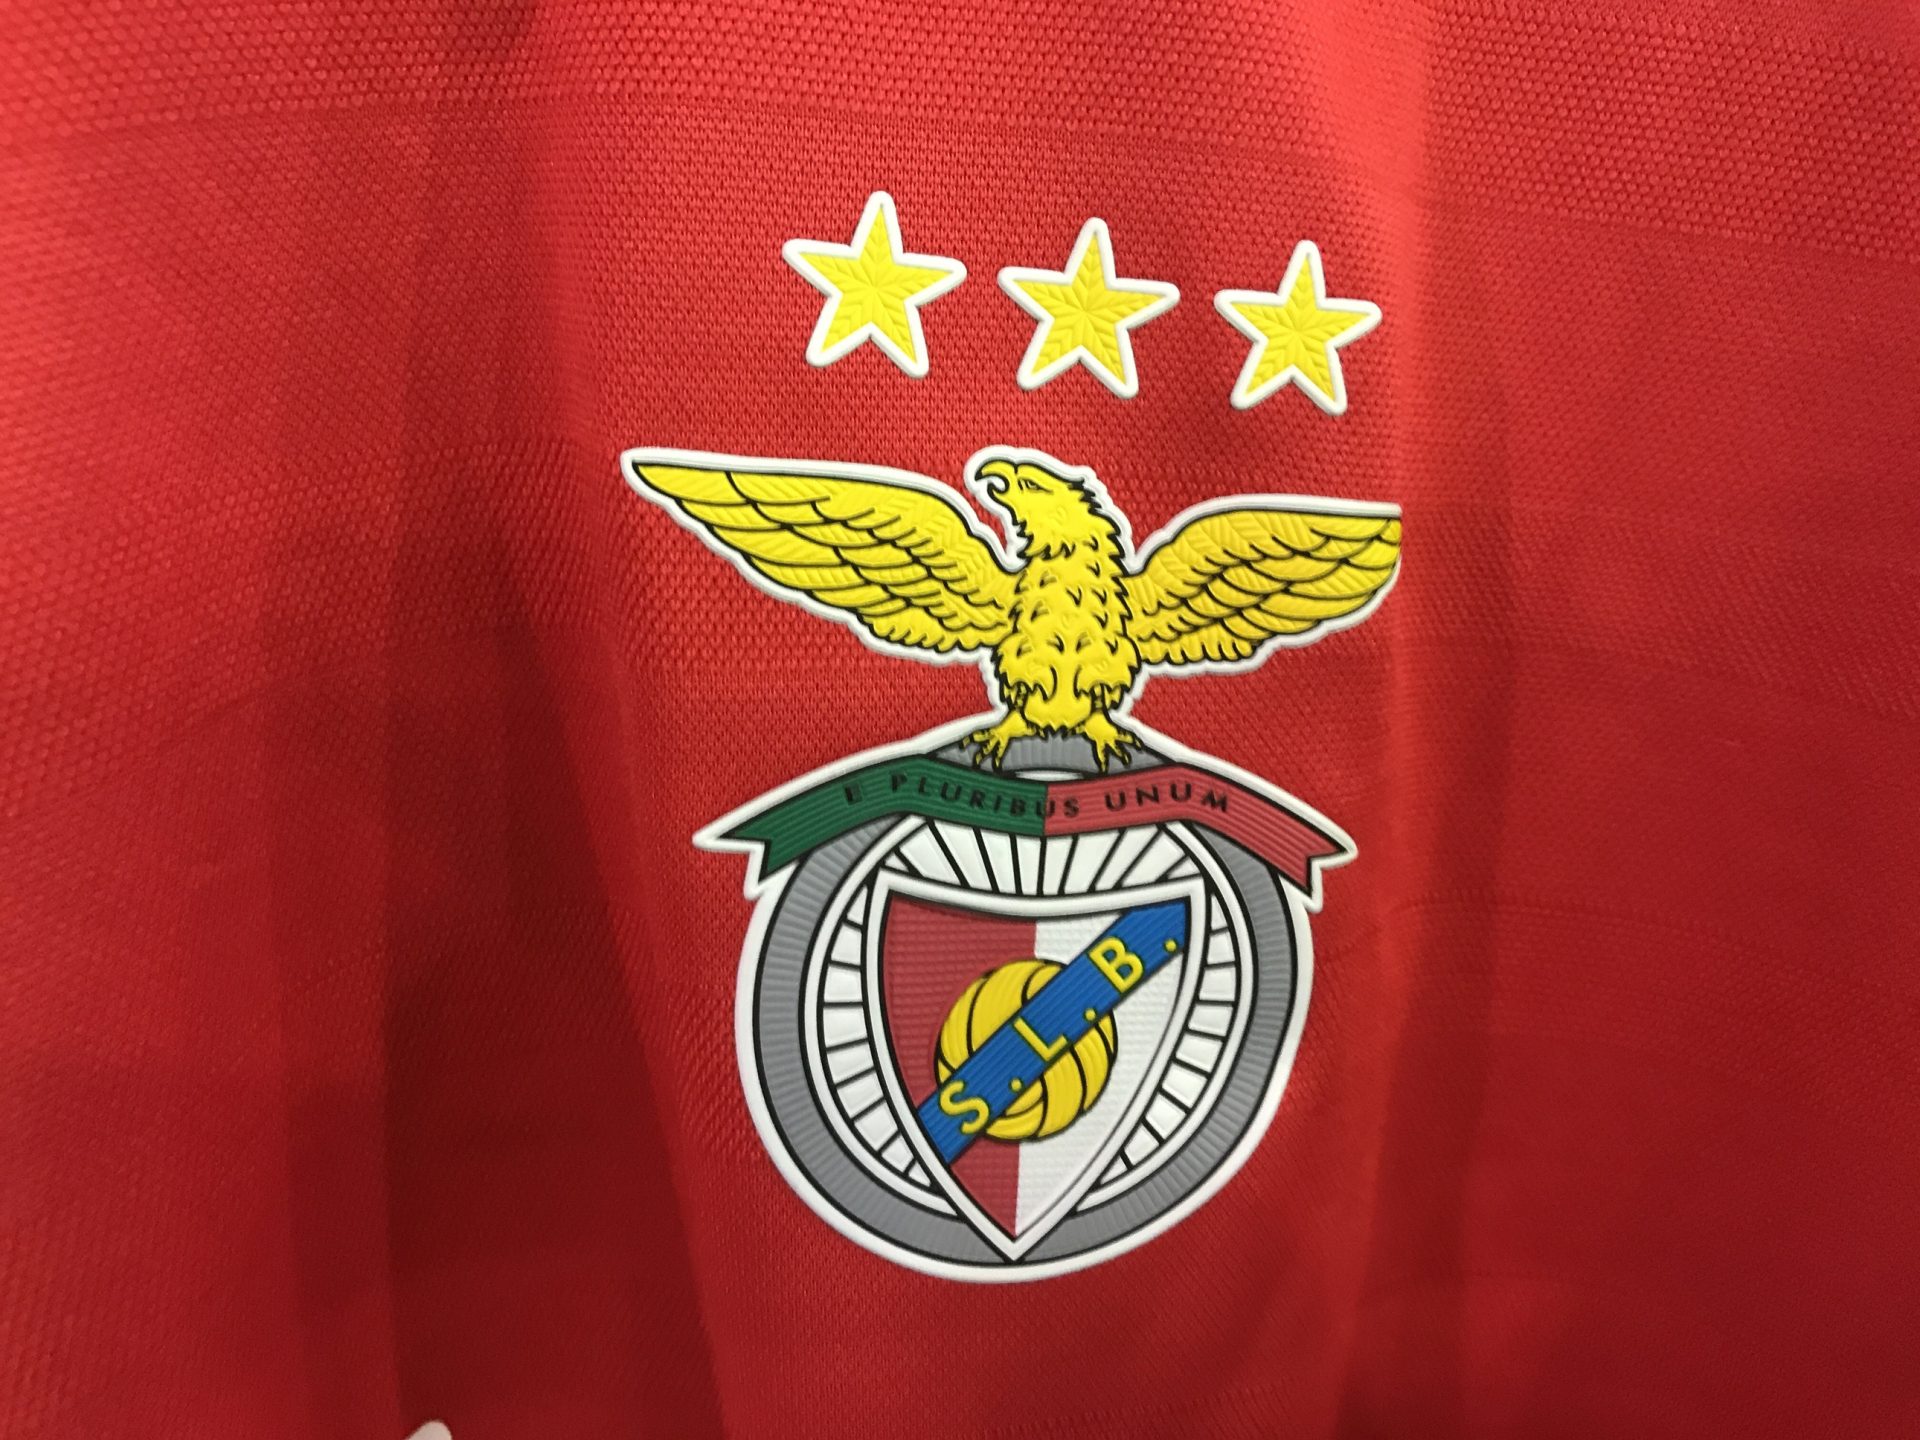 SAD do Benfica paga 5,1% de juro a investidores por empréstimo de 35 milhões de euros